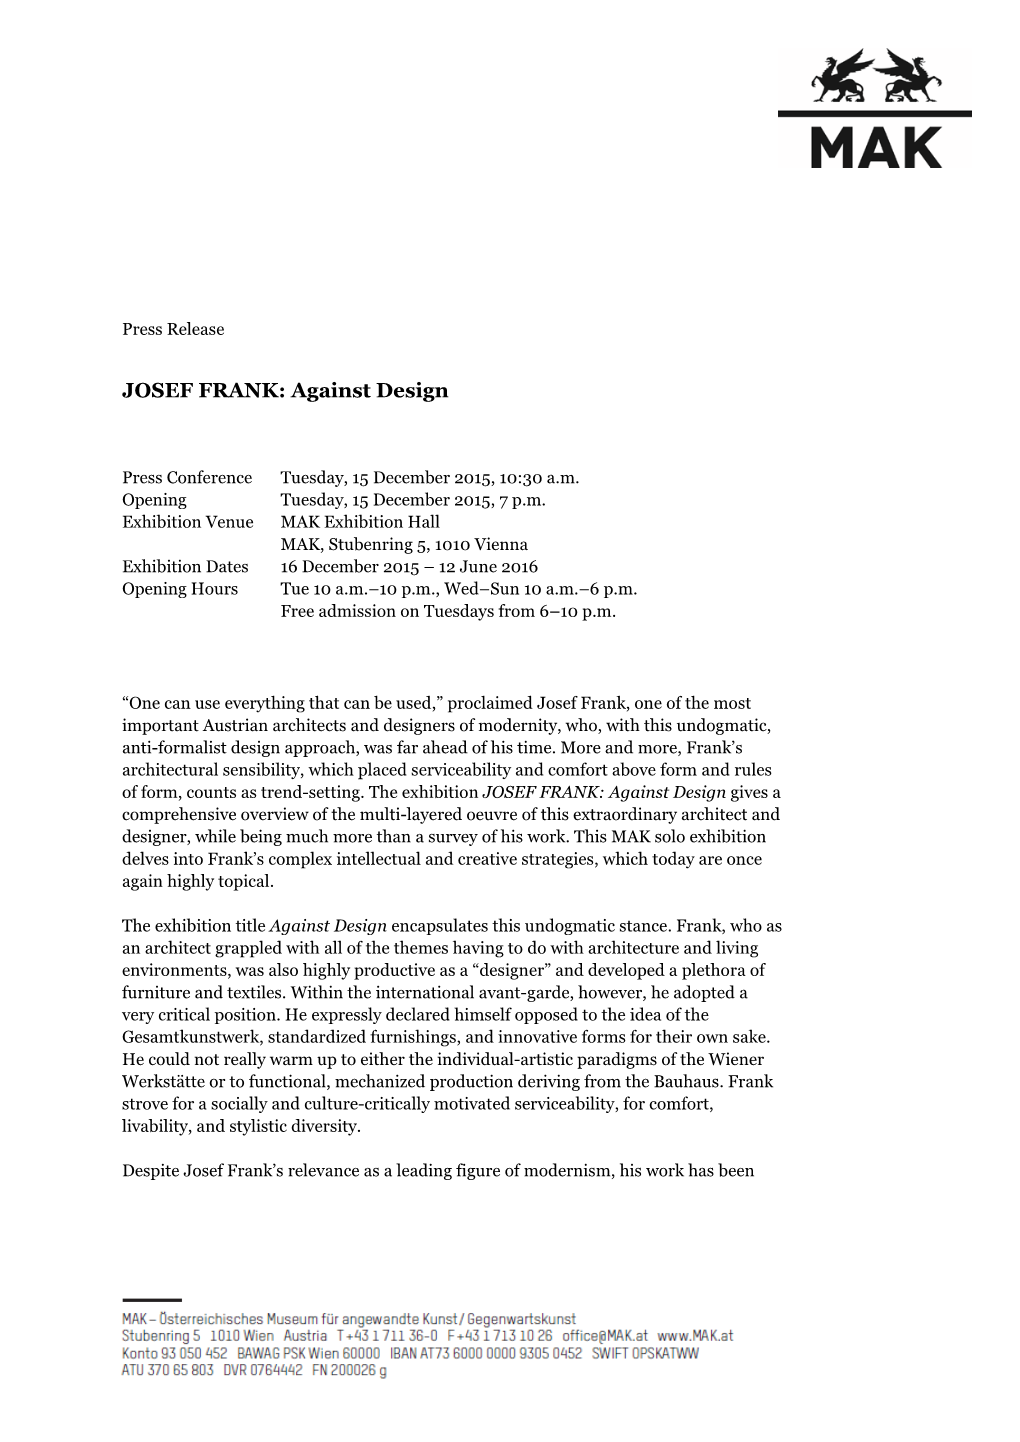 JOSEF FRANK: Against Design